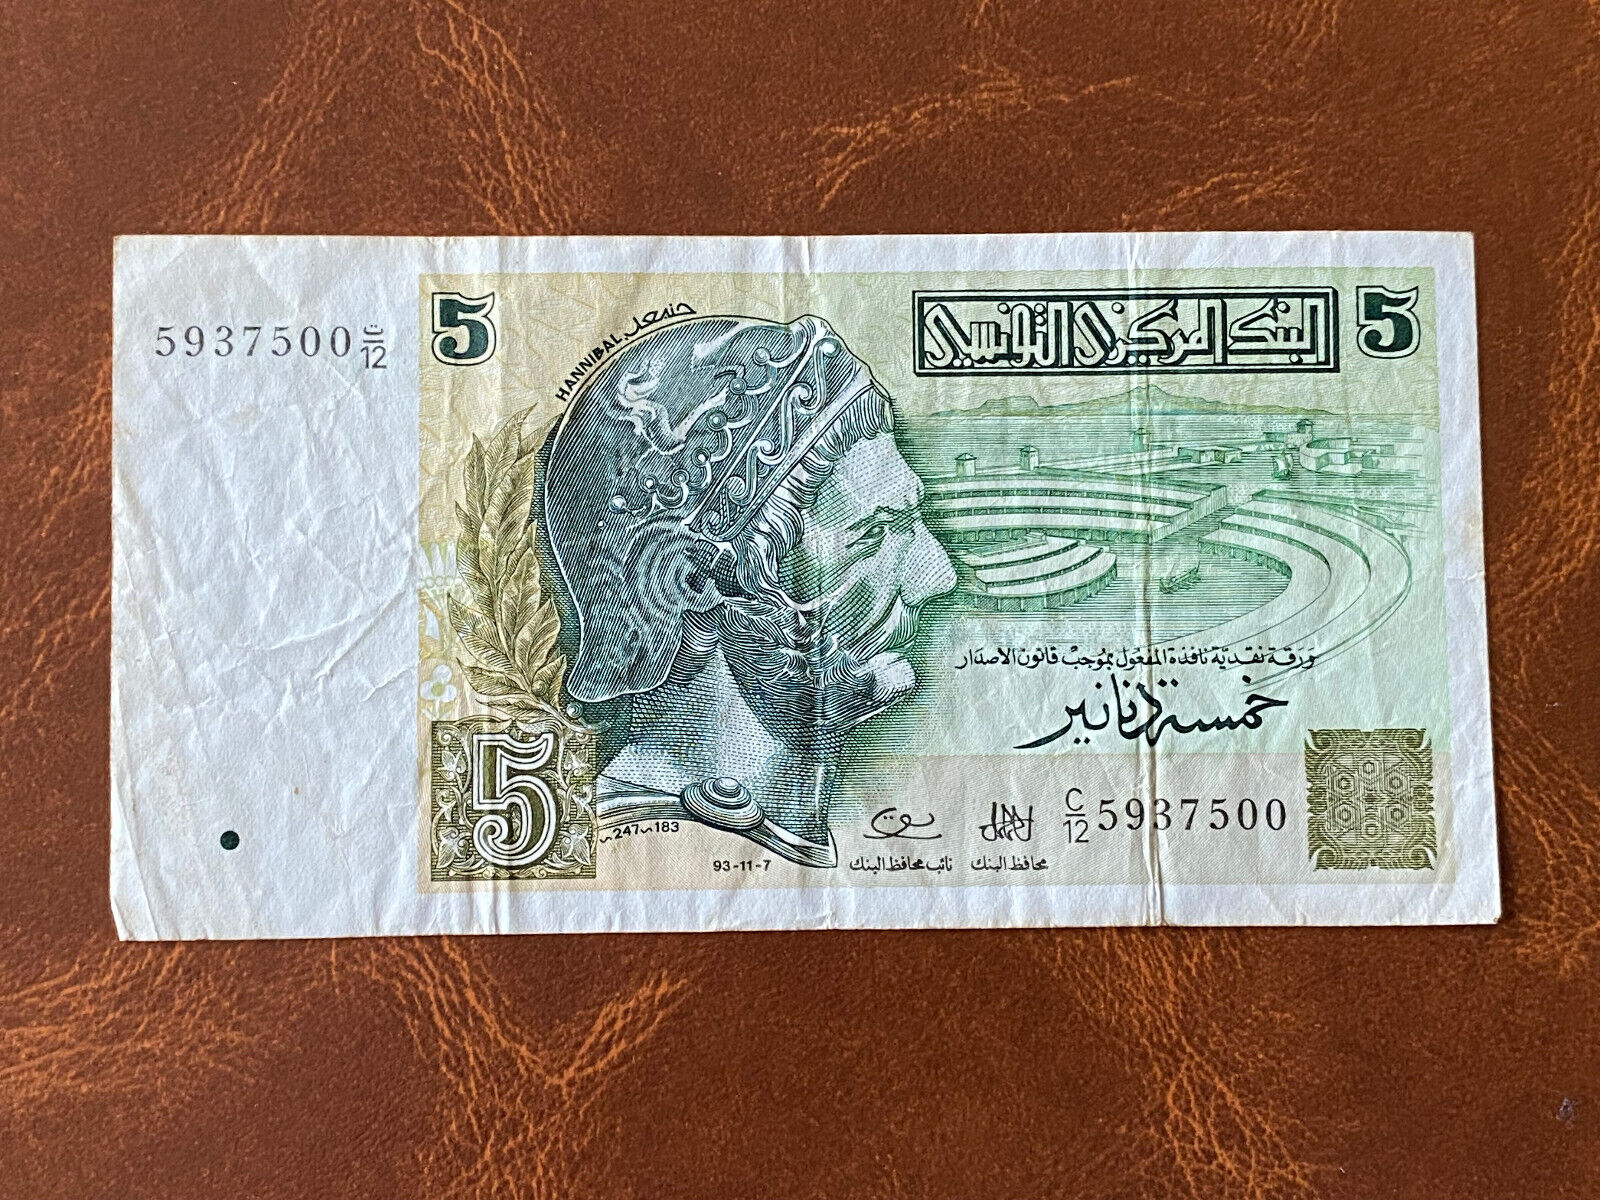 Tunisia 5 Dinars Banknote Used, Folded